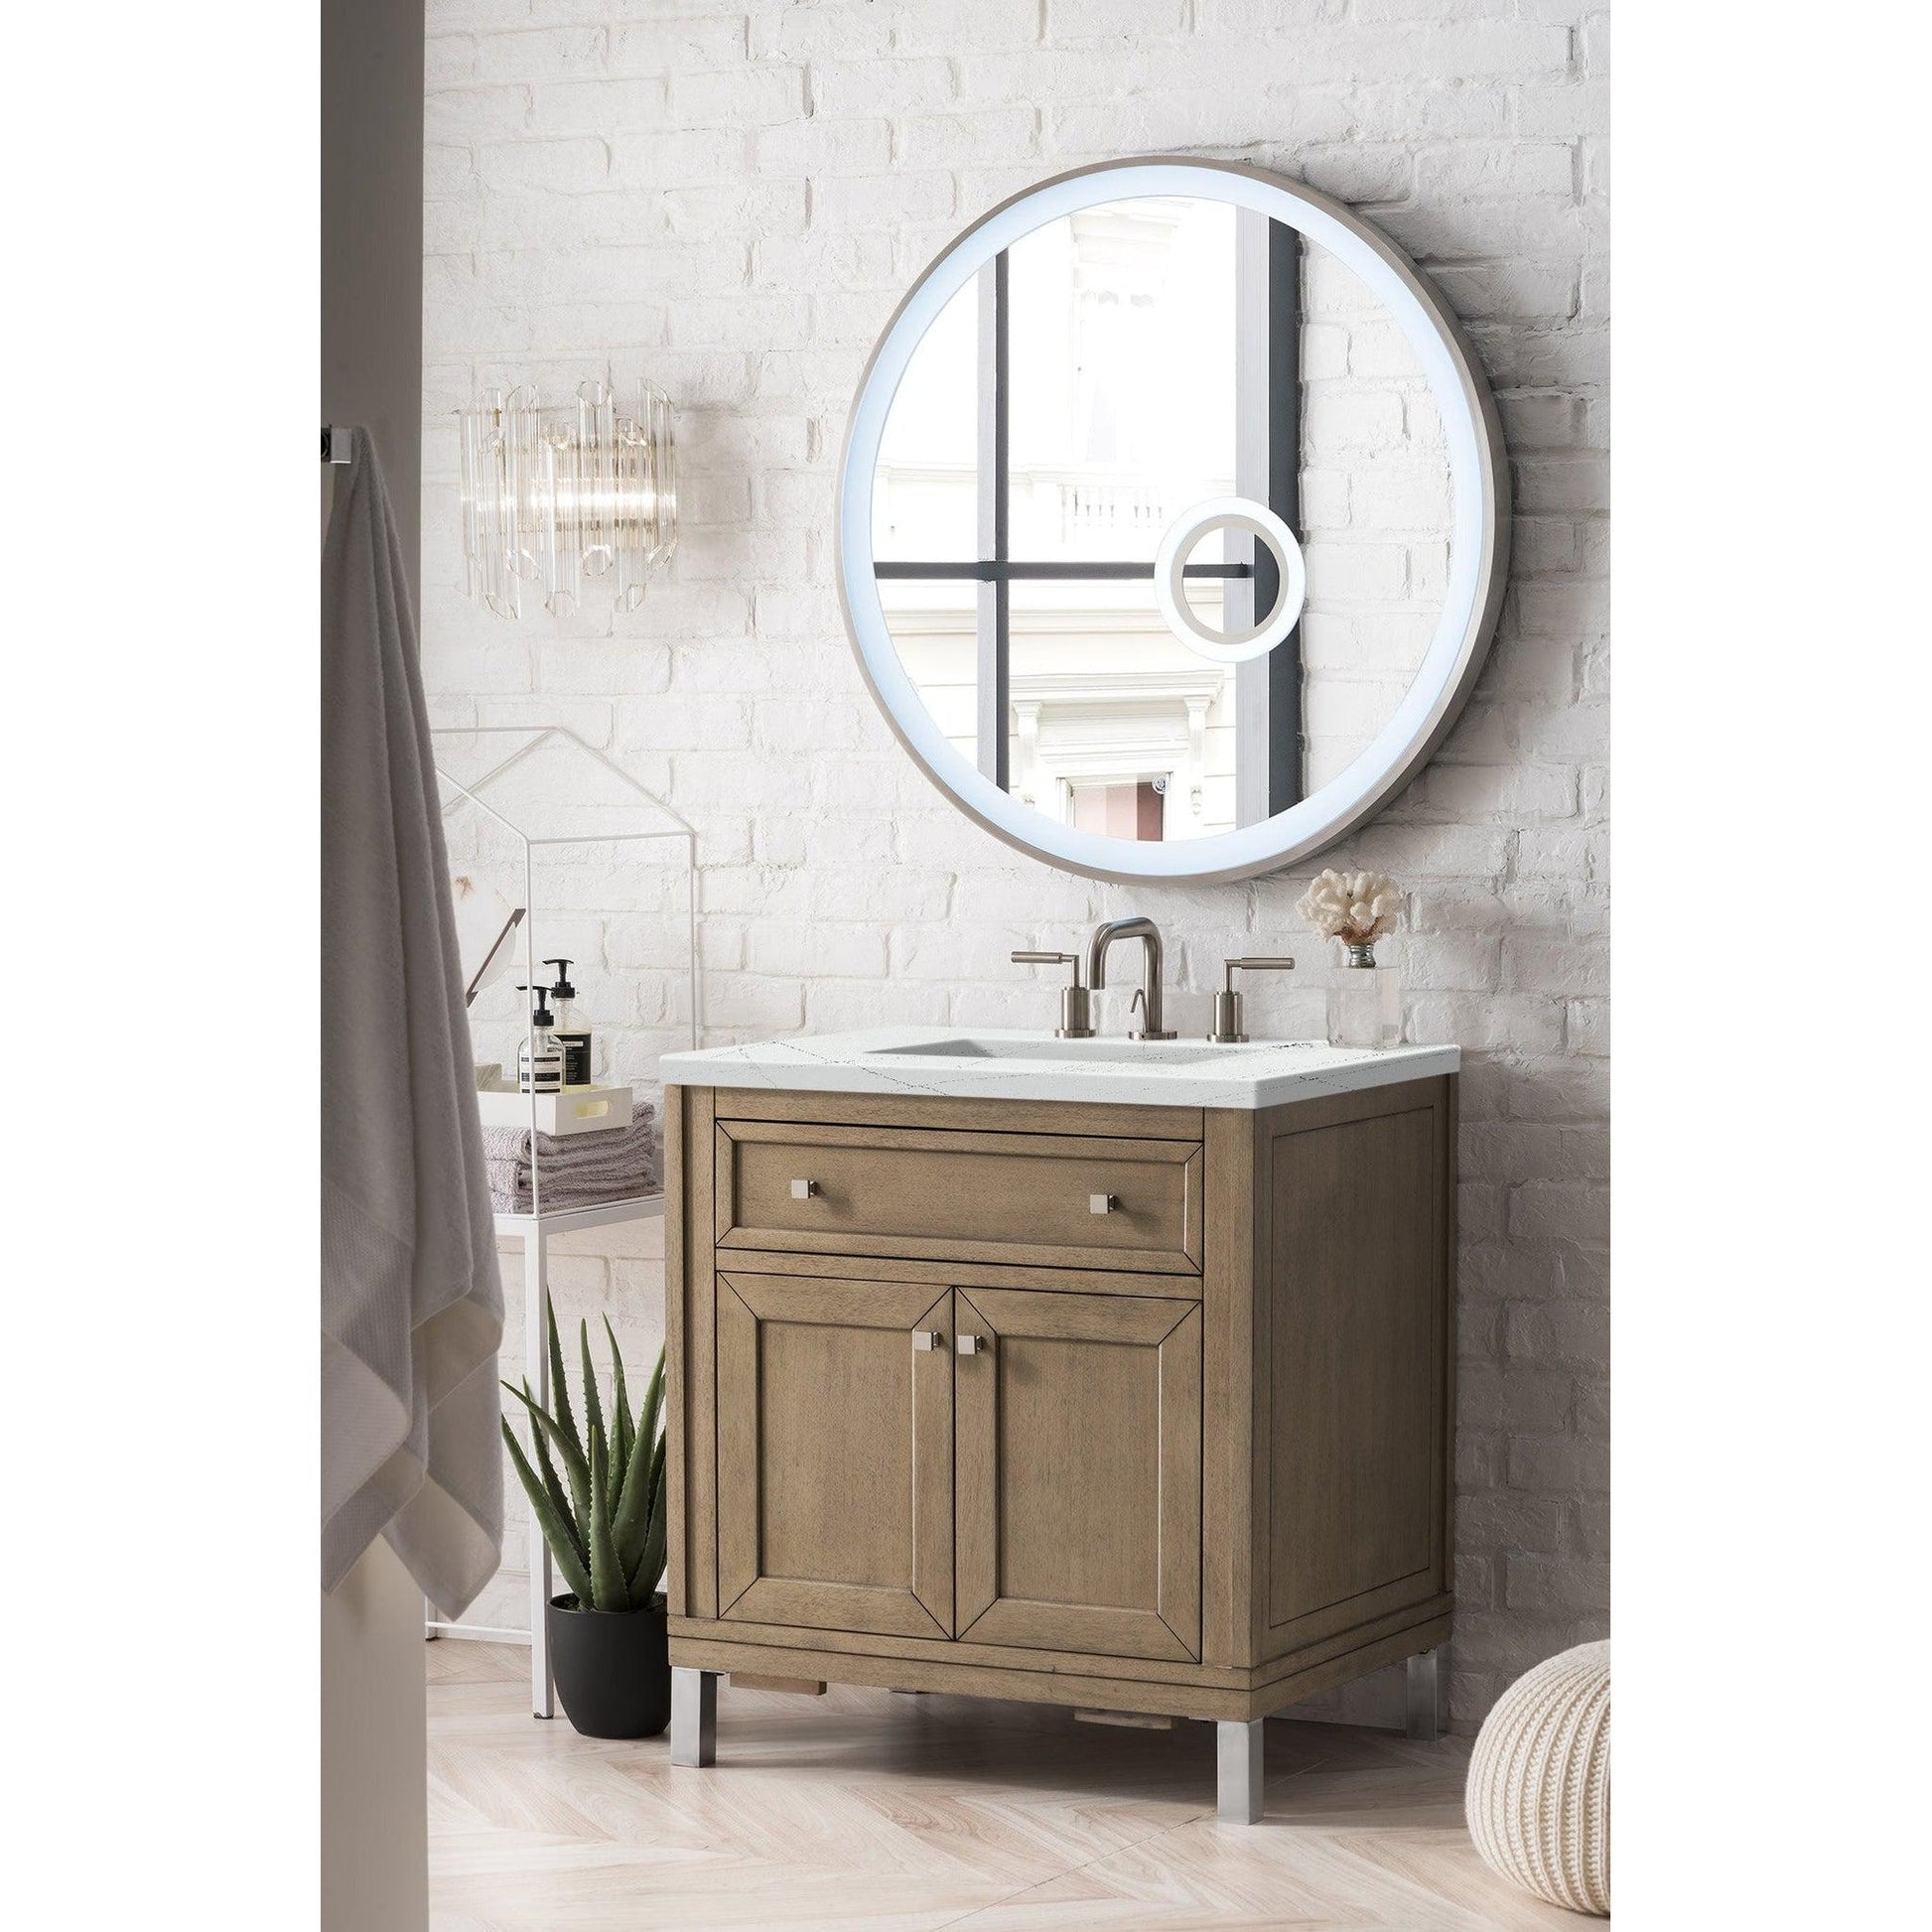 James Martin Chicago 30" Single Whitewashed Walnut Bathroom Vanity With 1" Ethereal Noctis Quartz Top and Rectangular Ceramic Sink